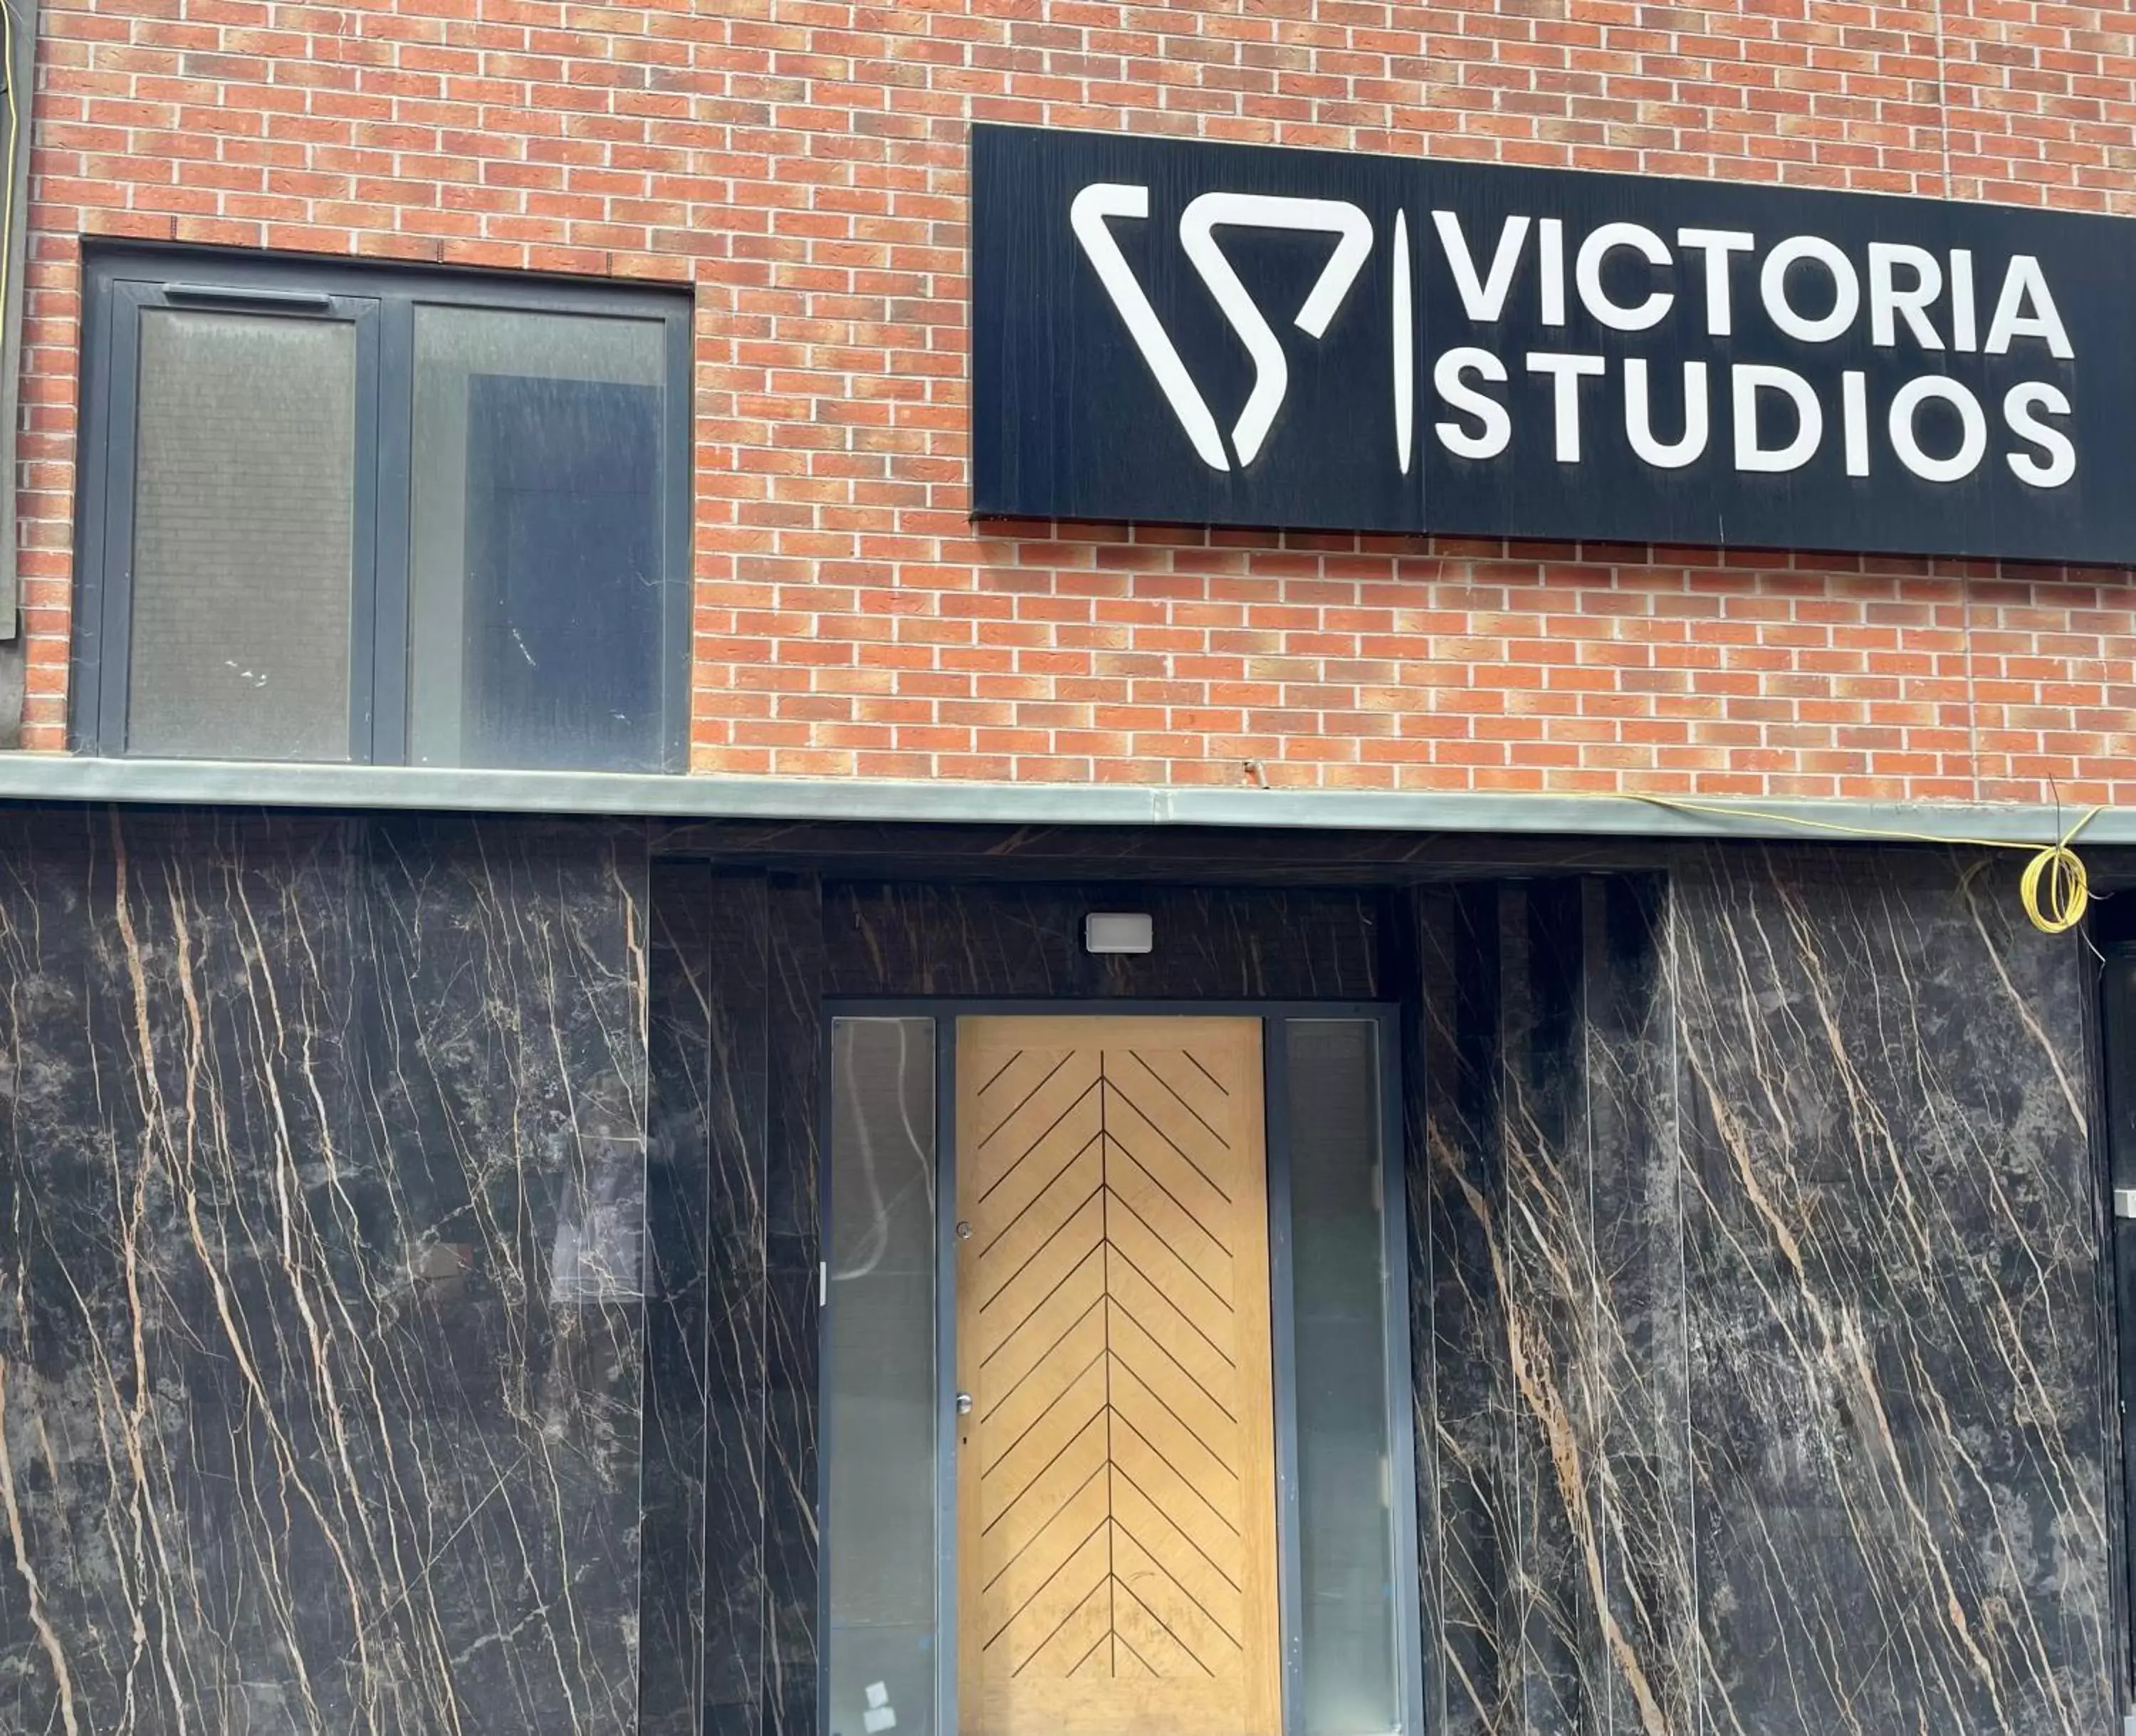 Property building in Victoria Studios